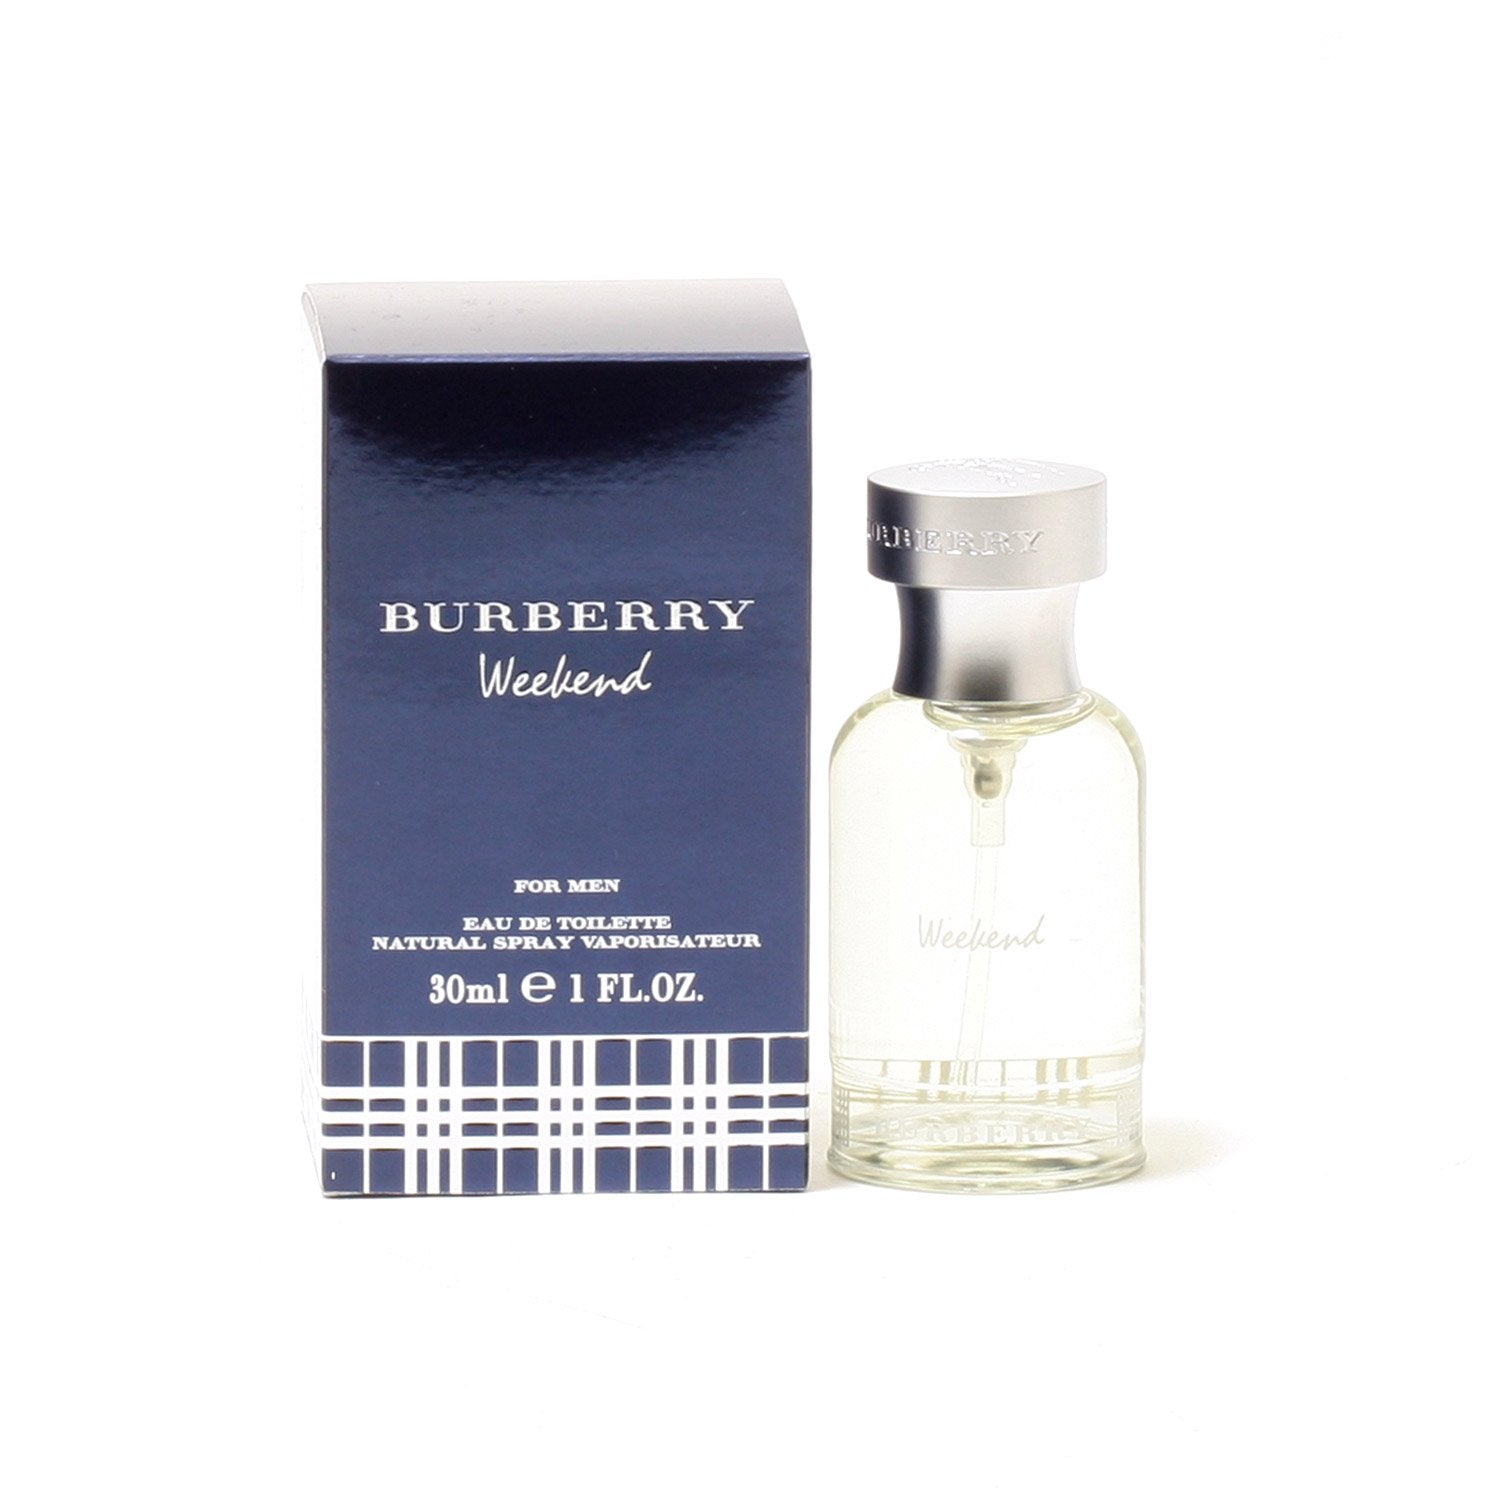 BURBERRY WEEKEND Fragrance - MEN EAU – FOR DE SPRAY Room TOILETTE